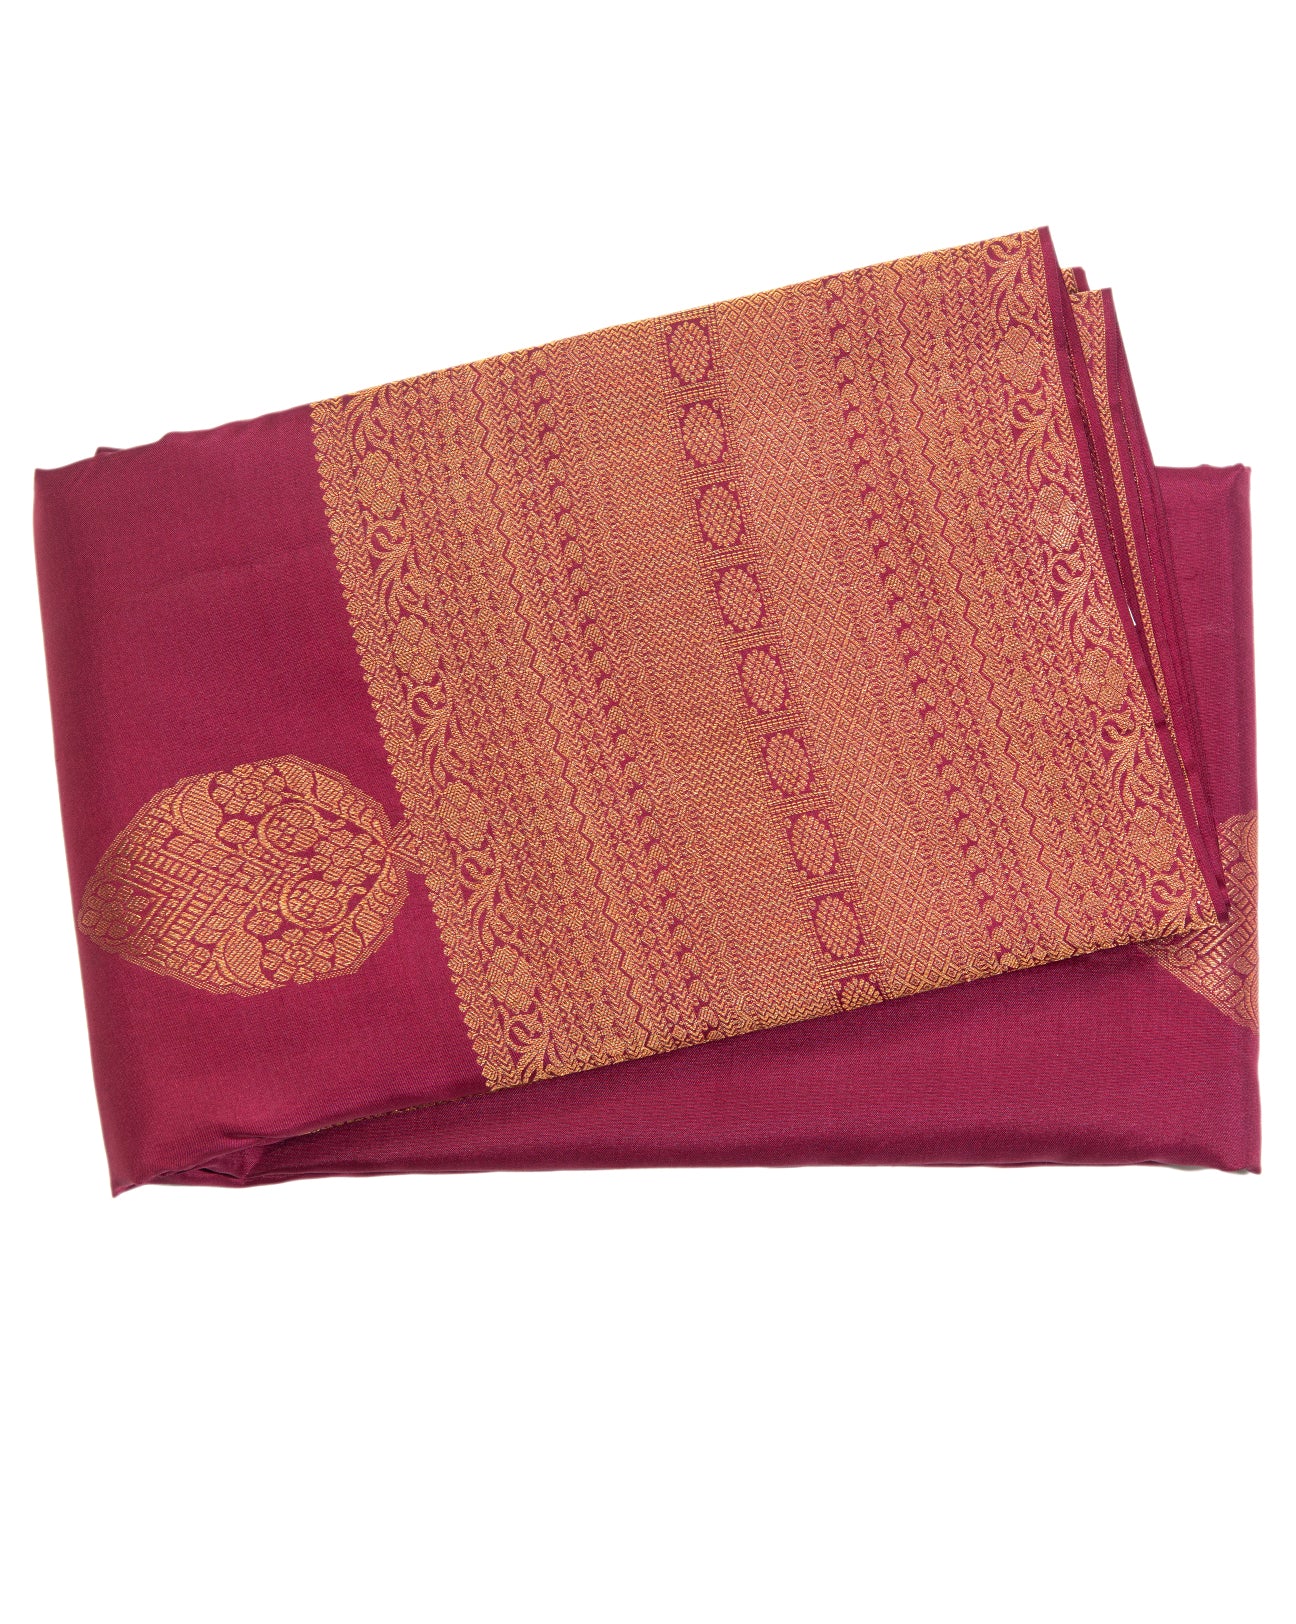 Sangria Kancheepuram Saree - swayamvara silks